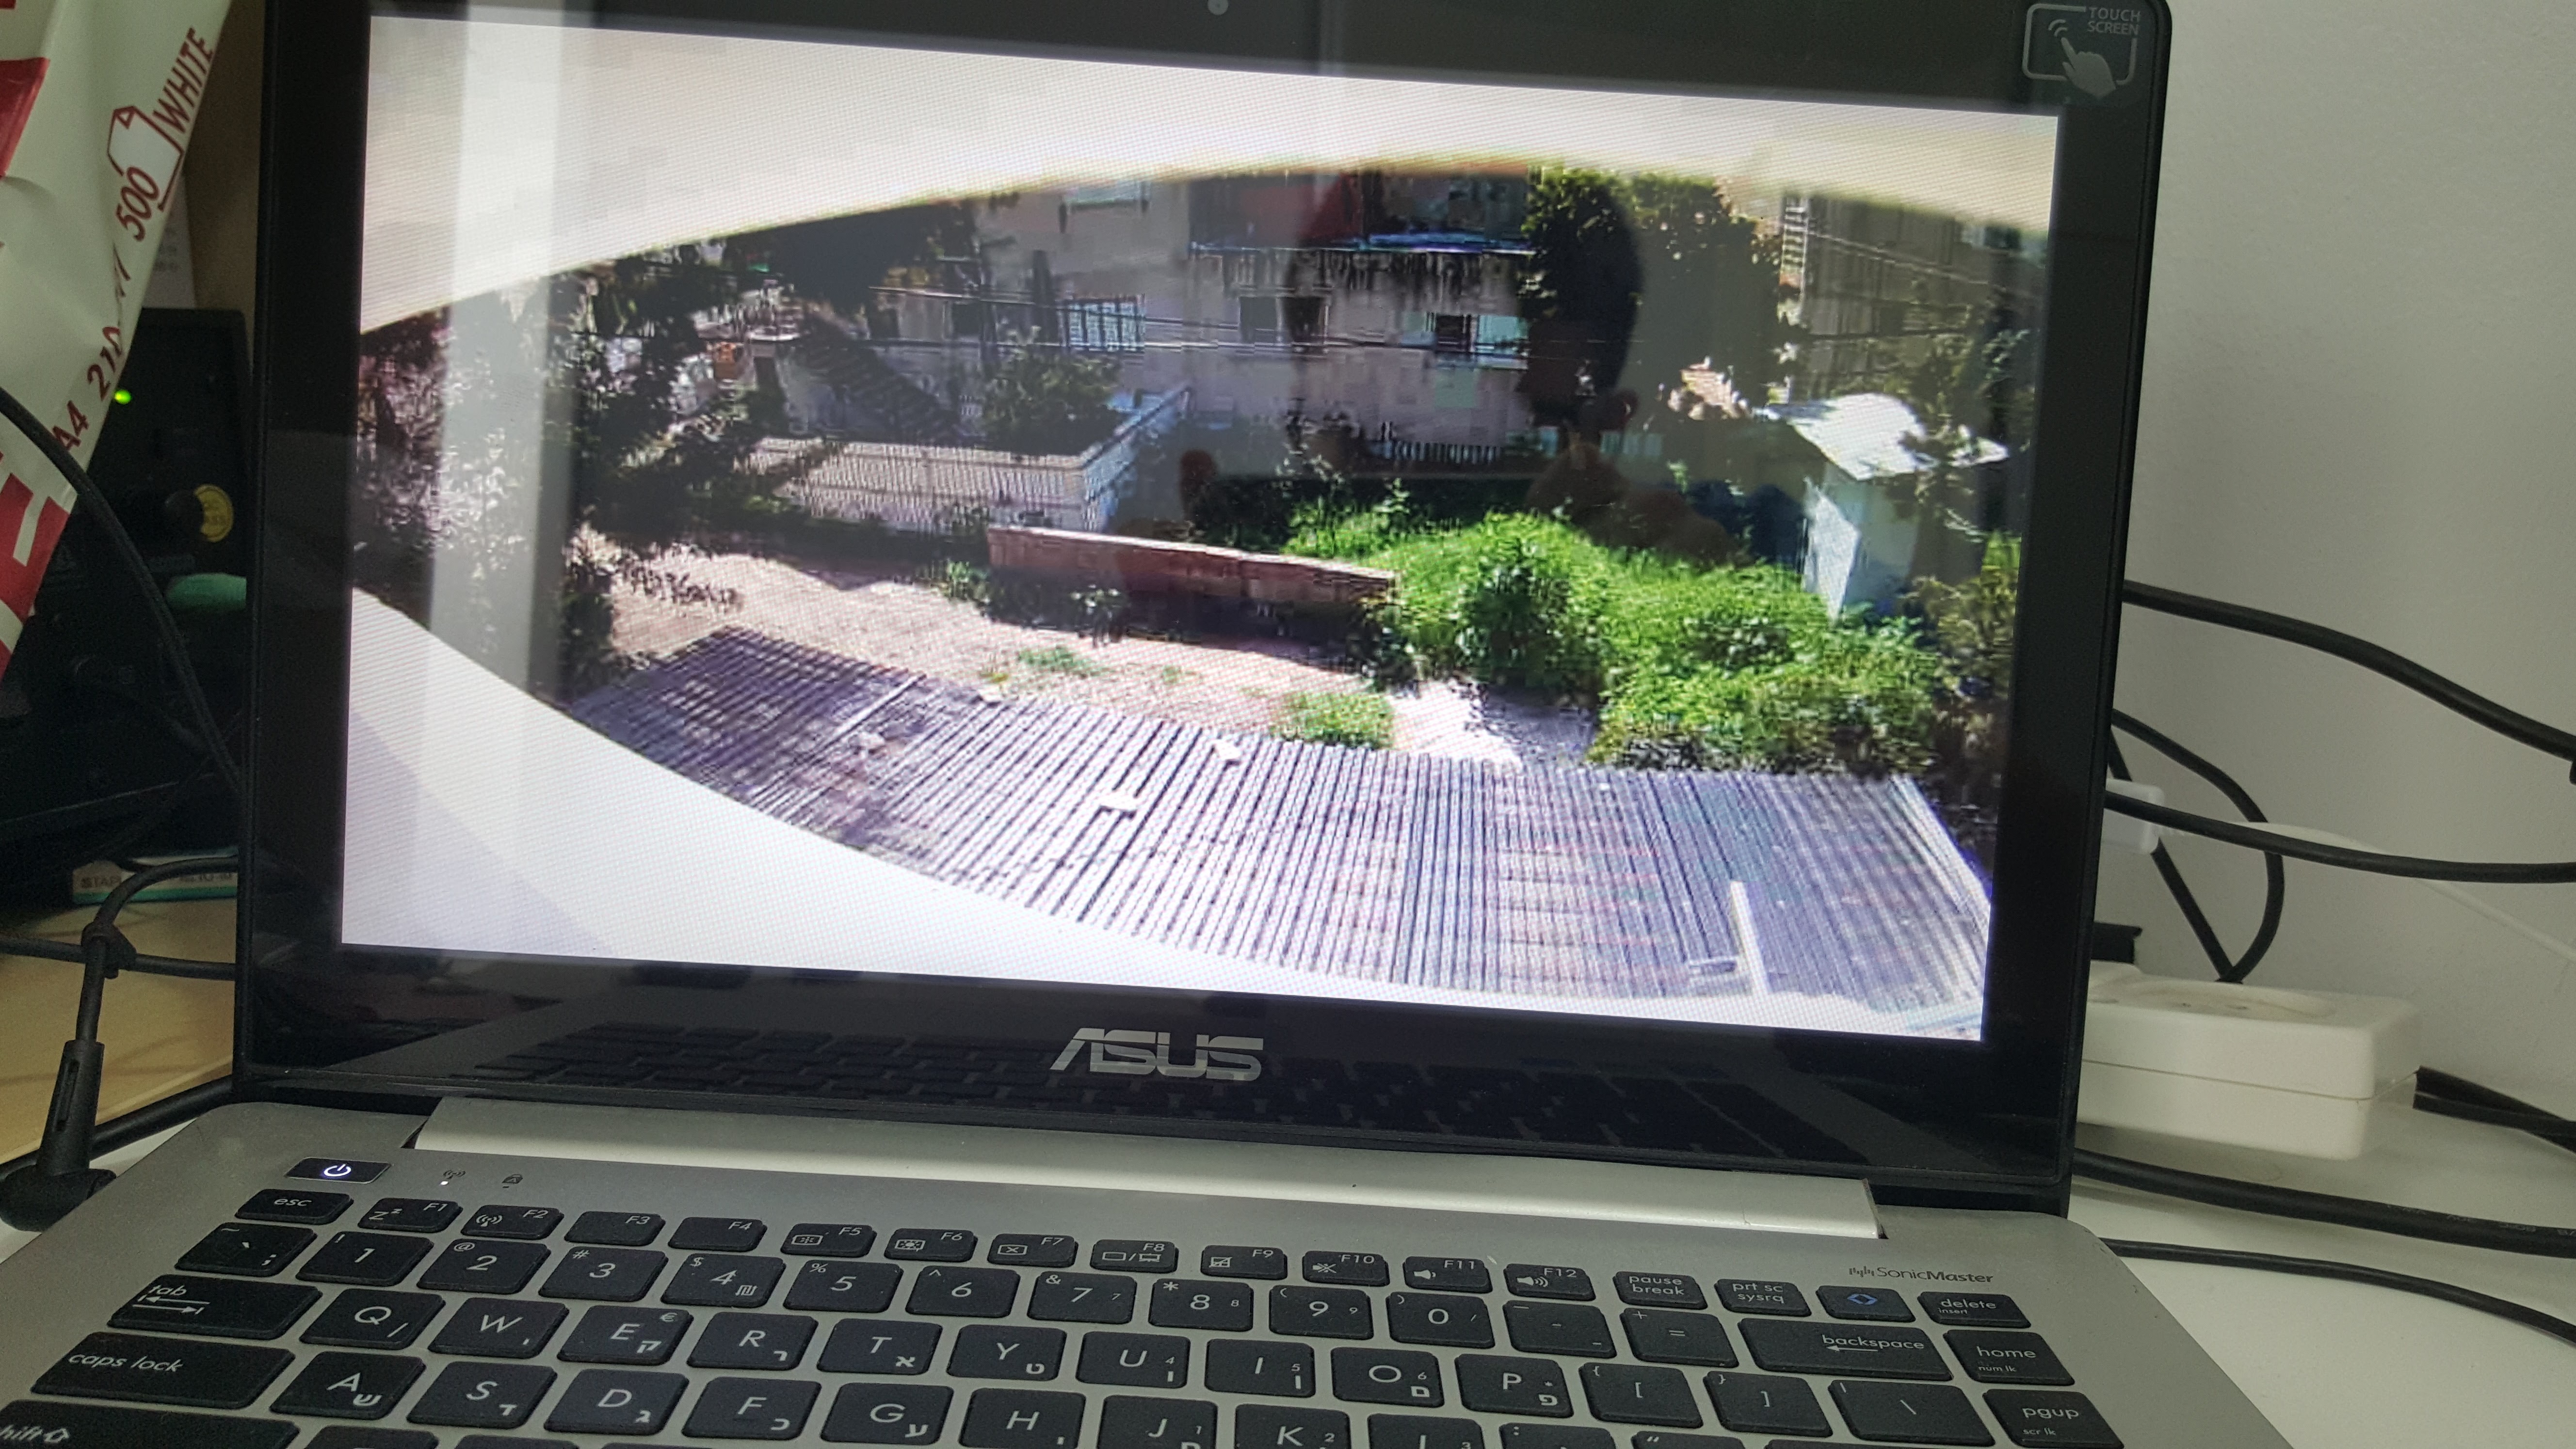 Eken H9 video stream from the PC through rtsp using VLC